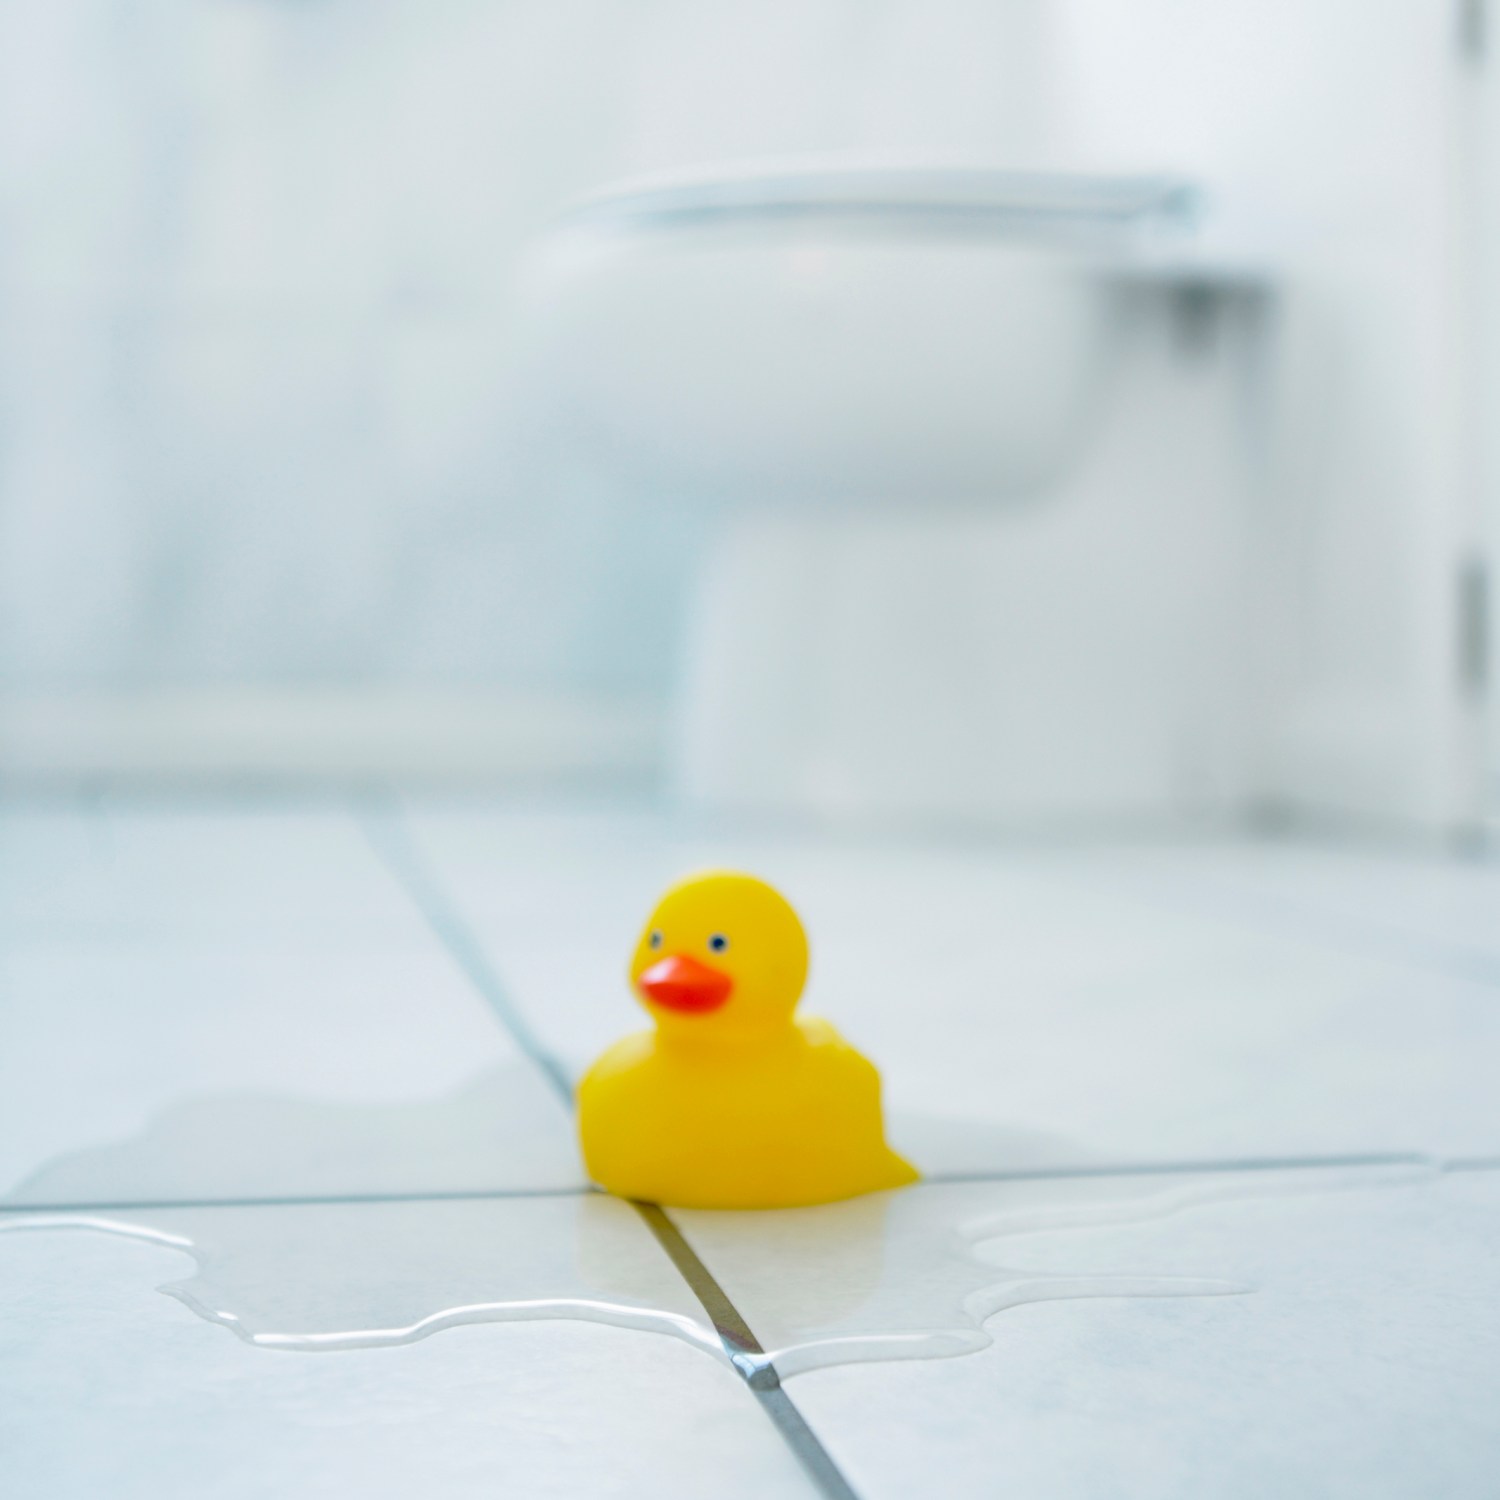 choosing-bathroom-flooring-rubber-duck-wet-tile